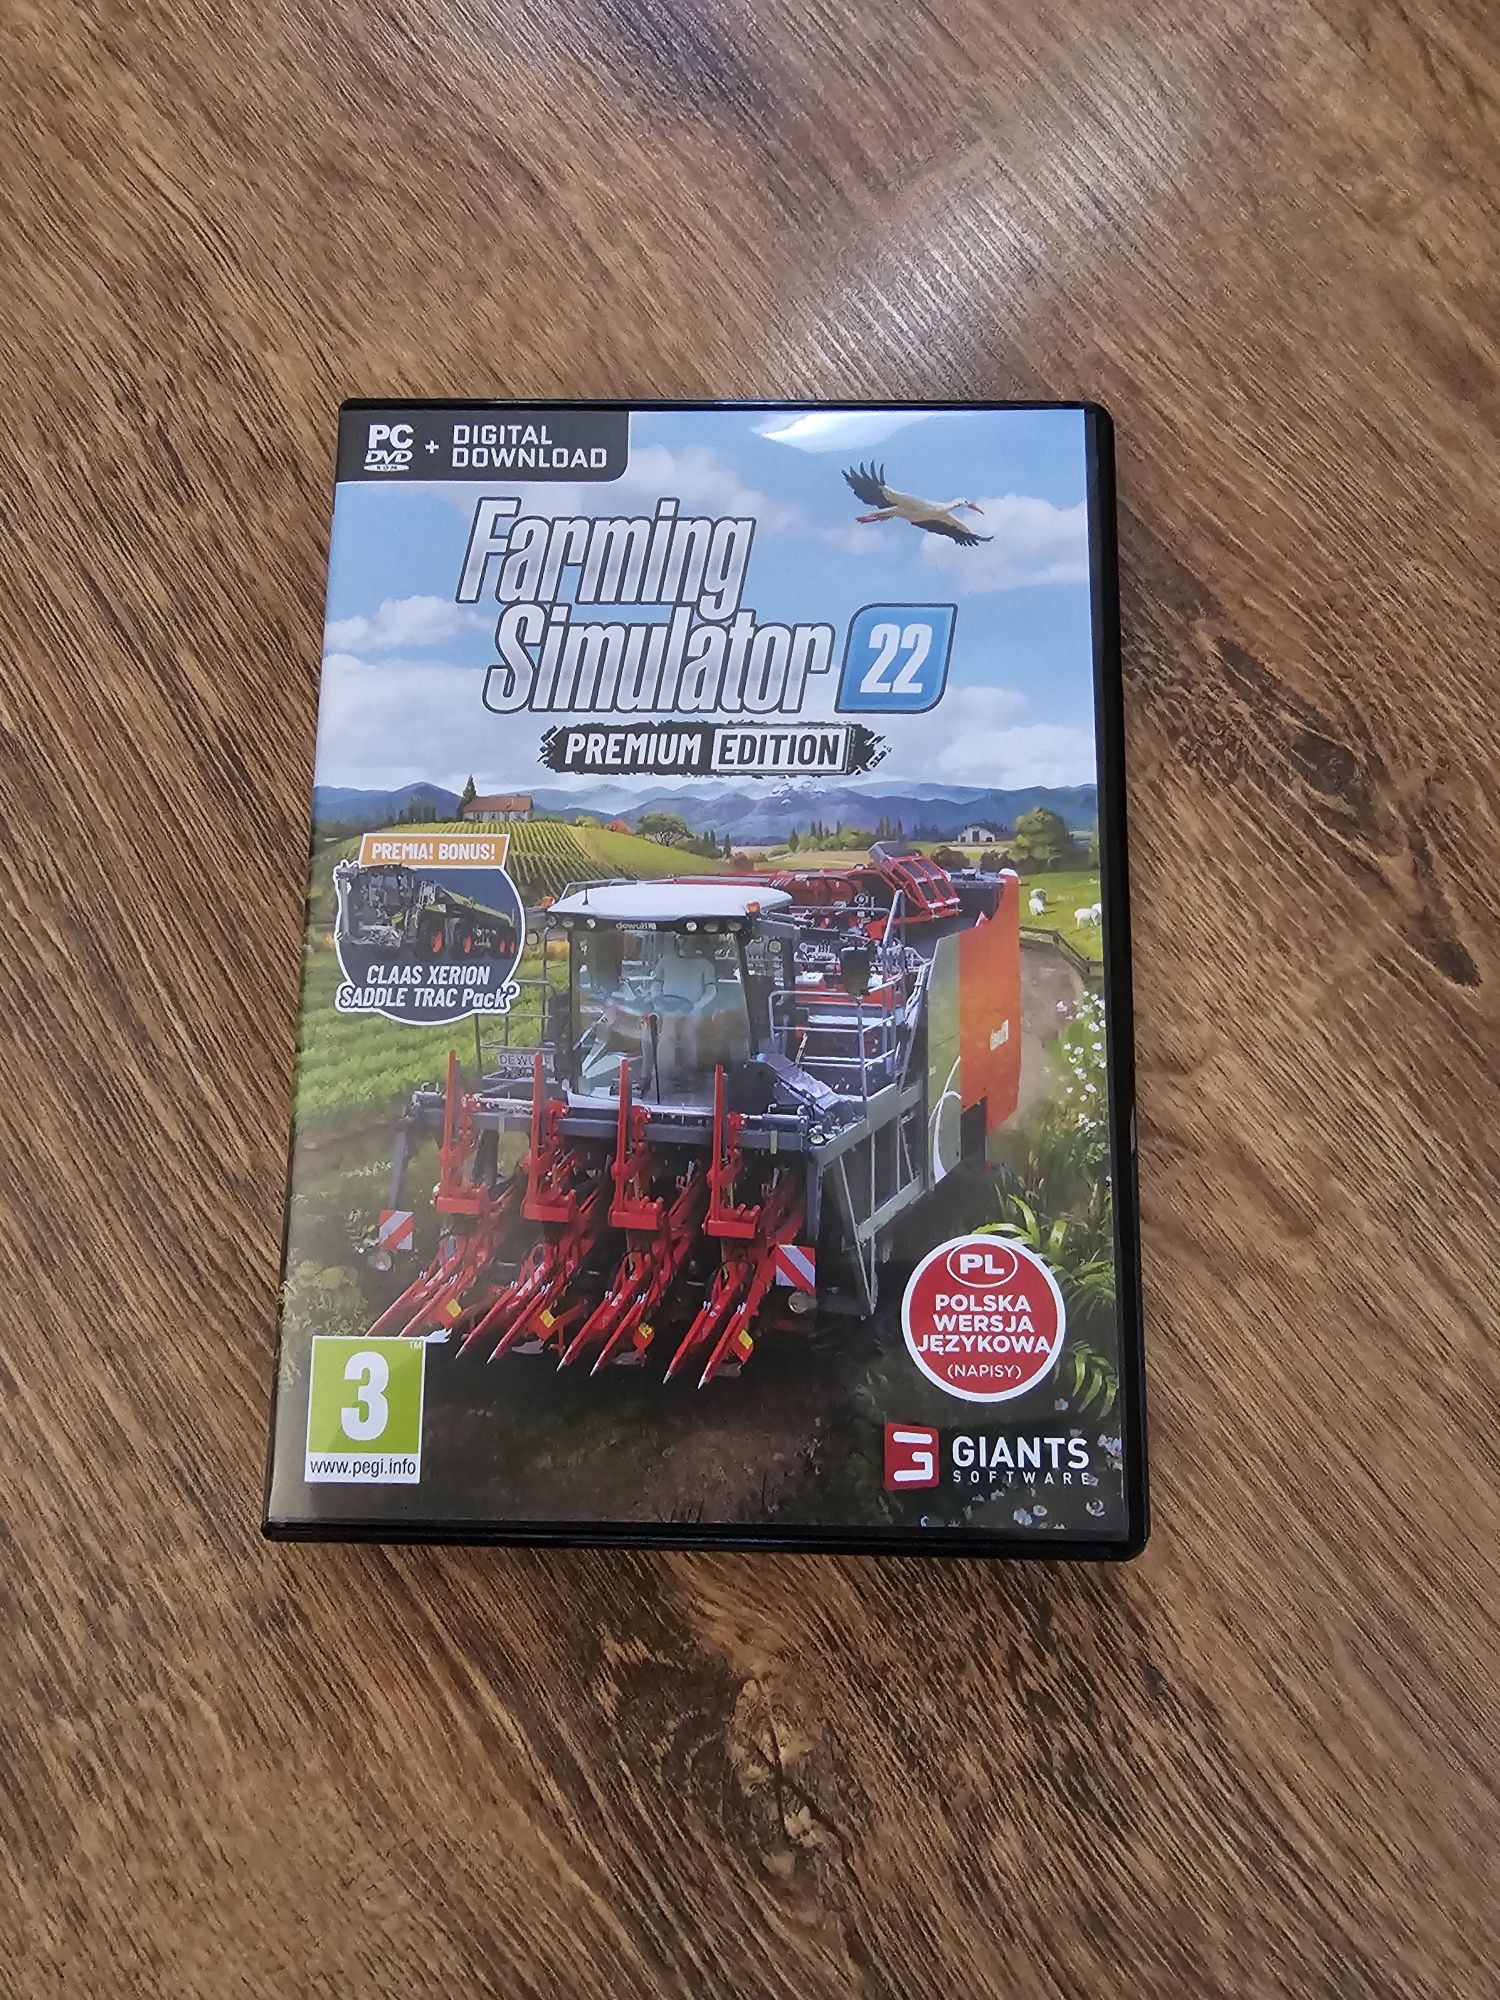 Gra Farming simulator 22 PC